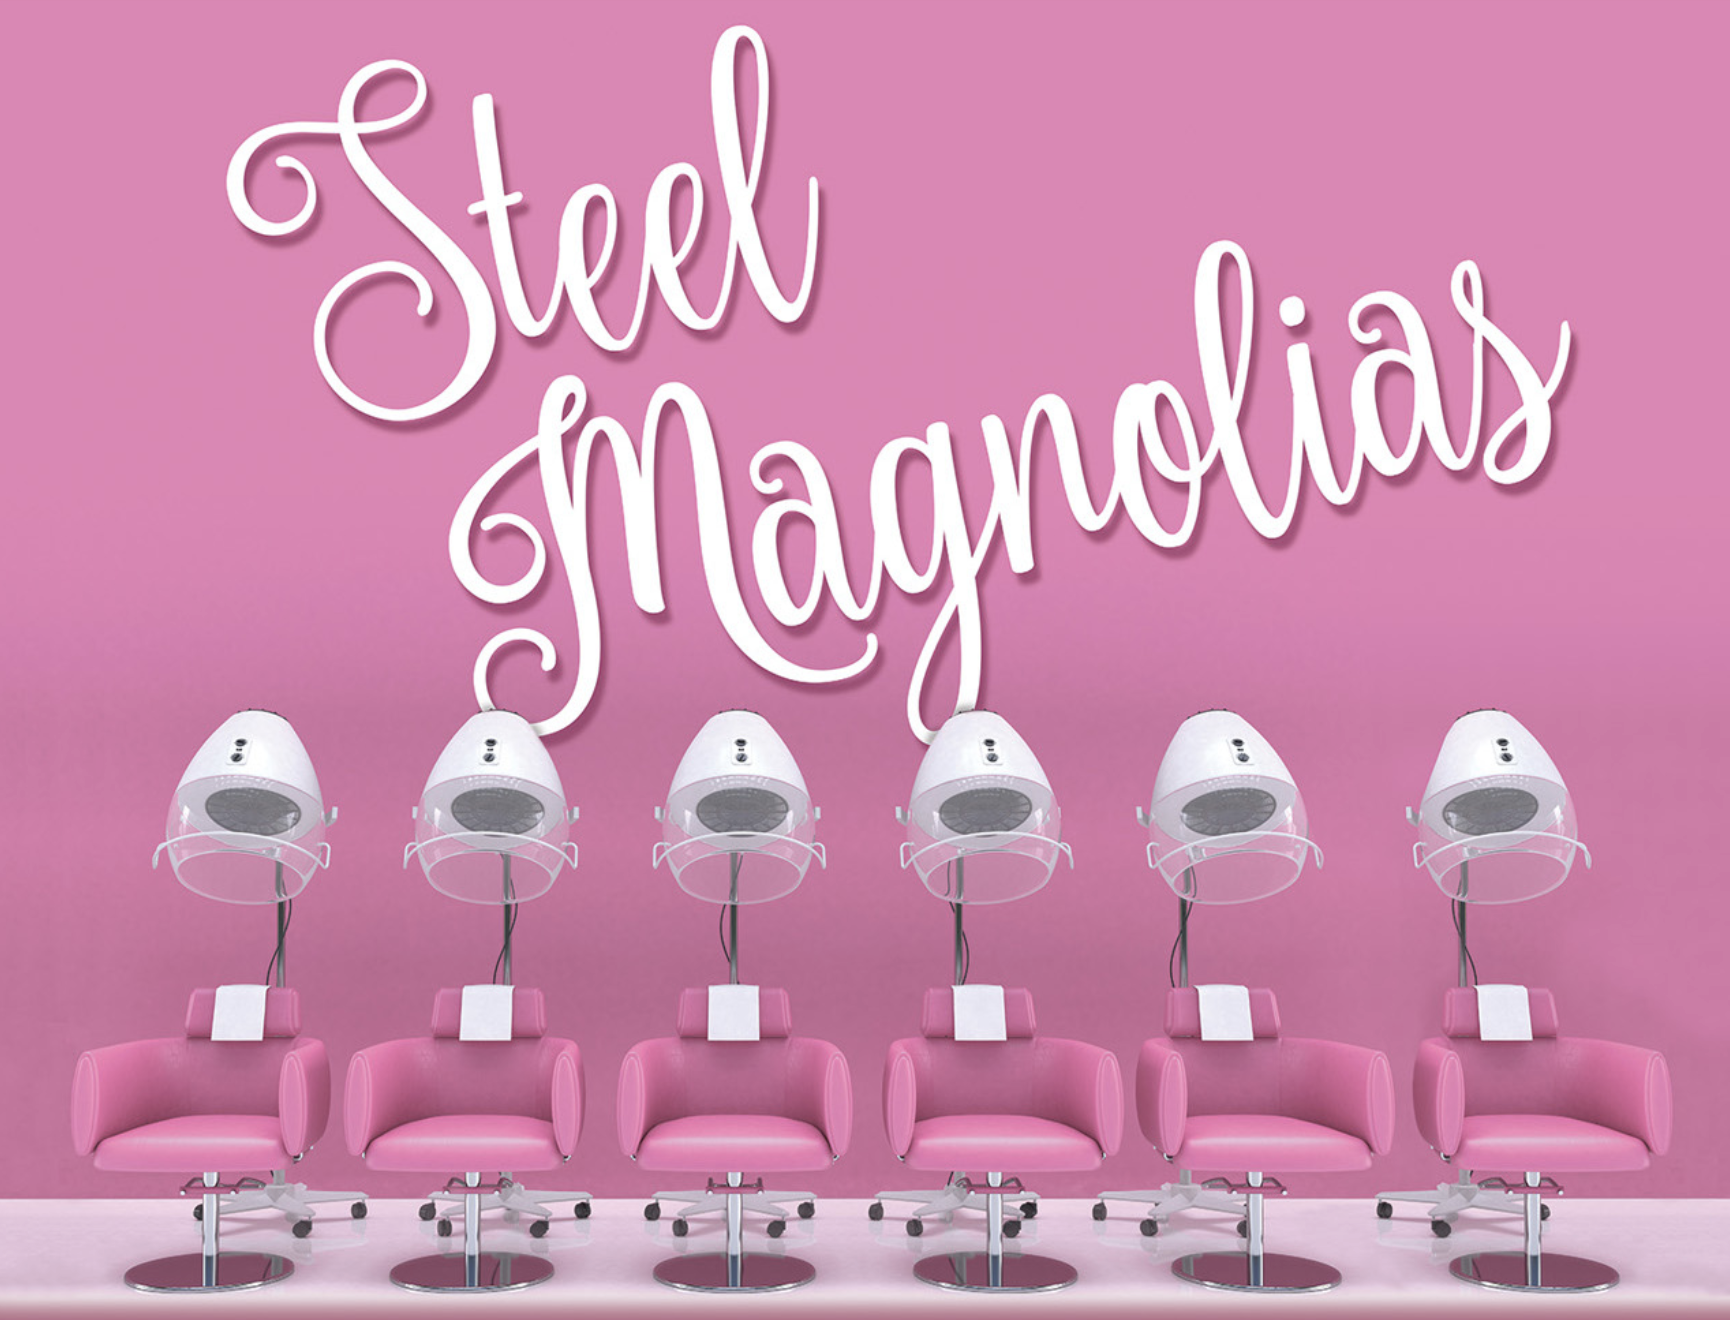 steel magnolias tour running time